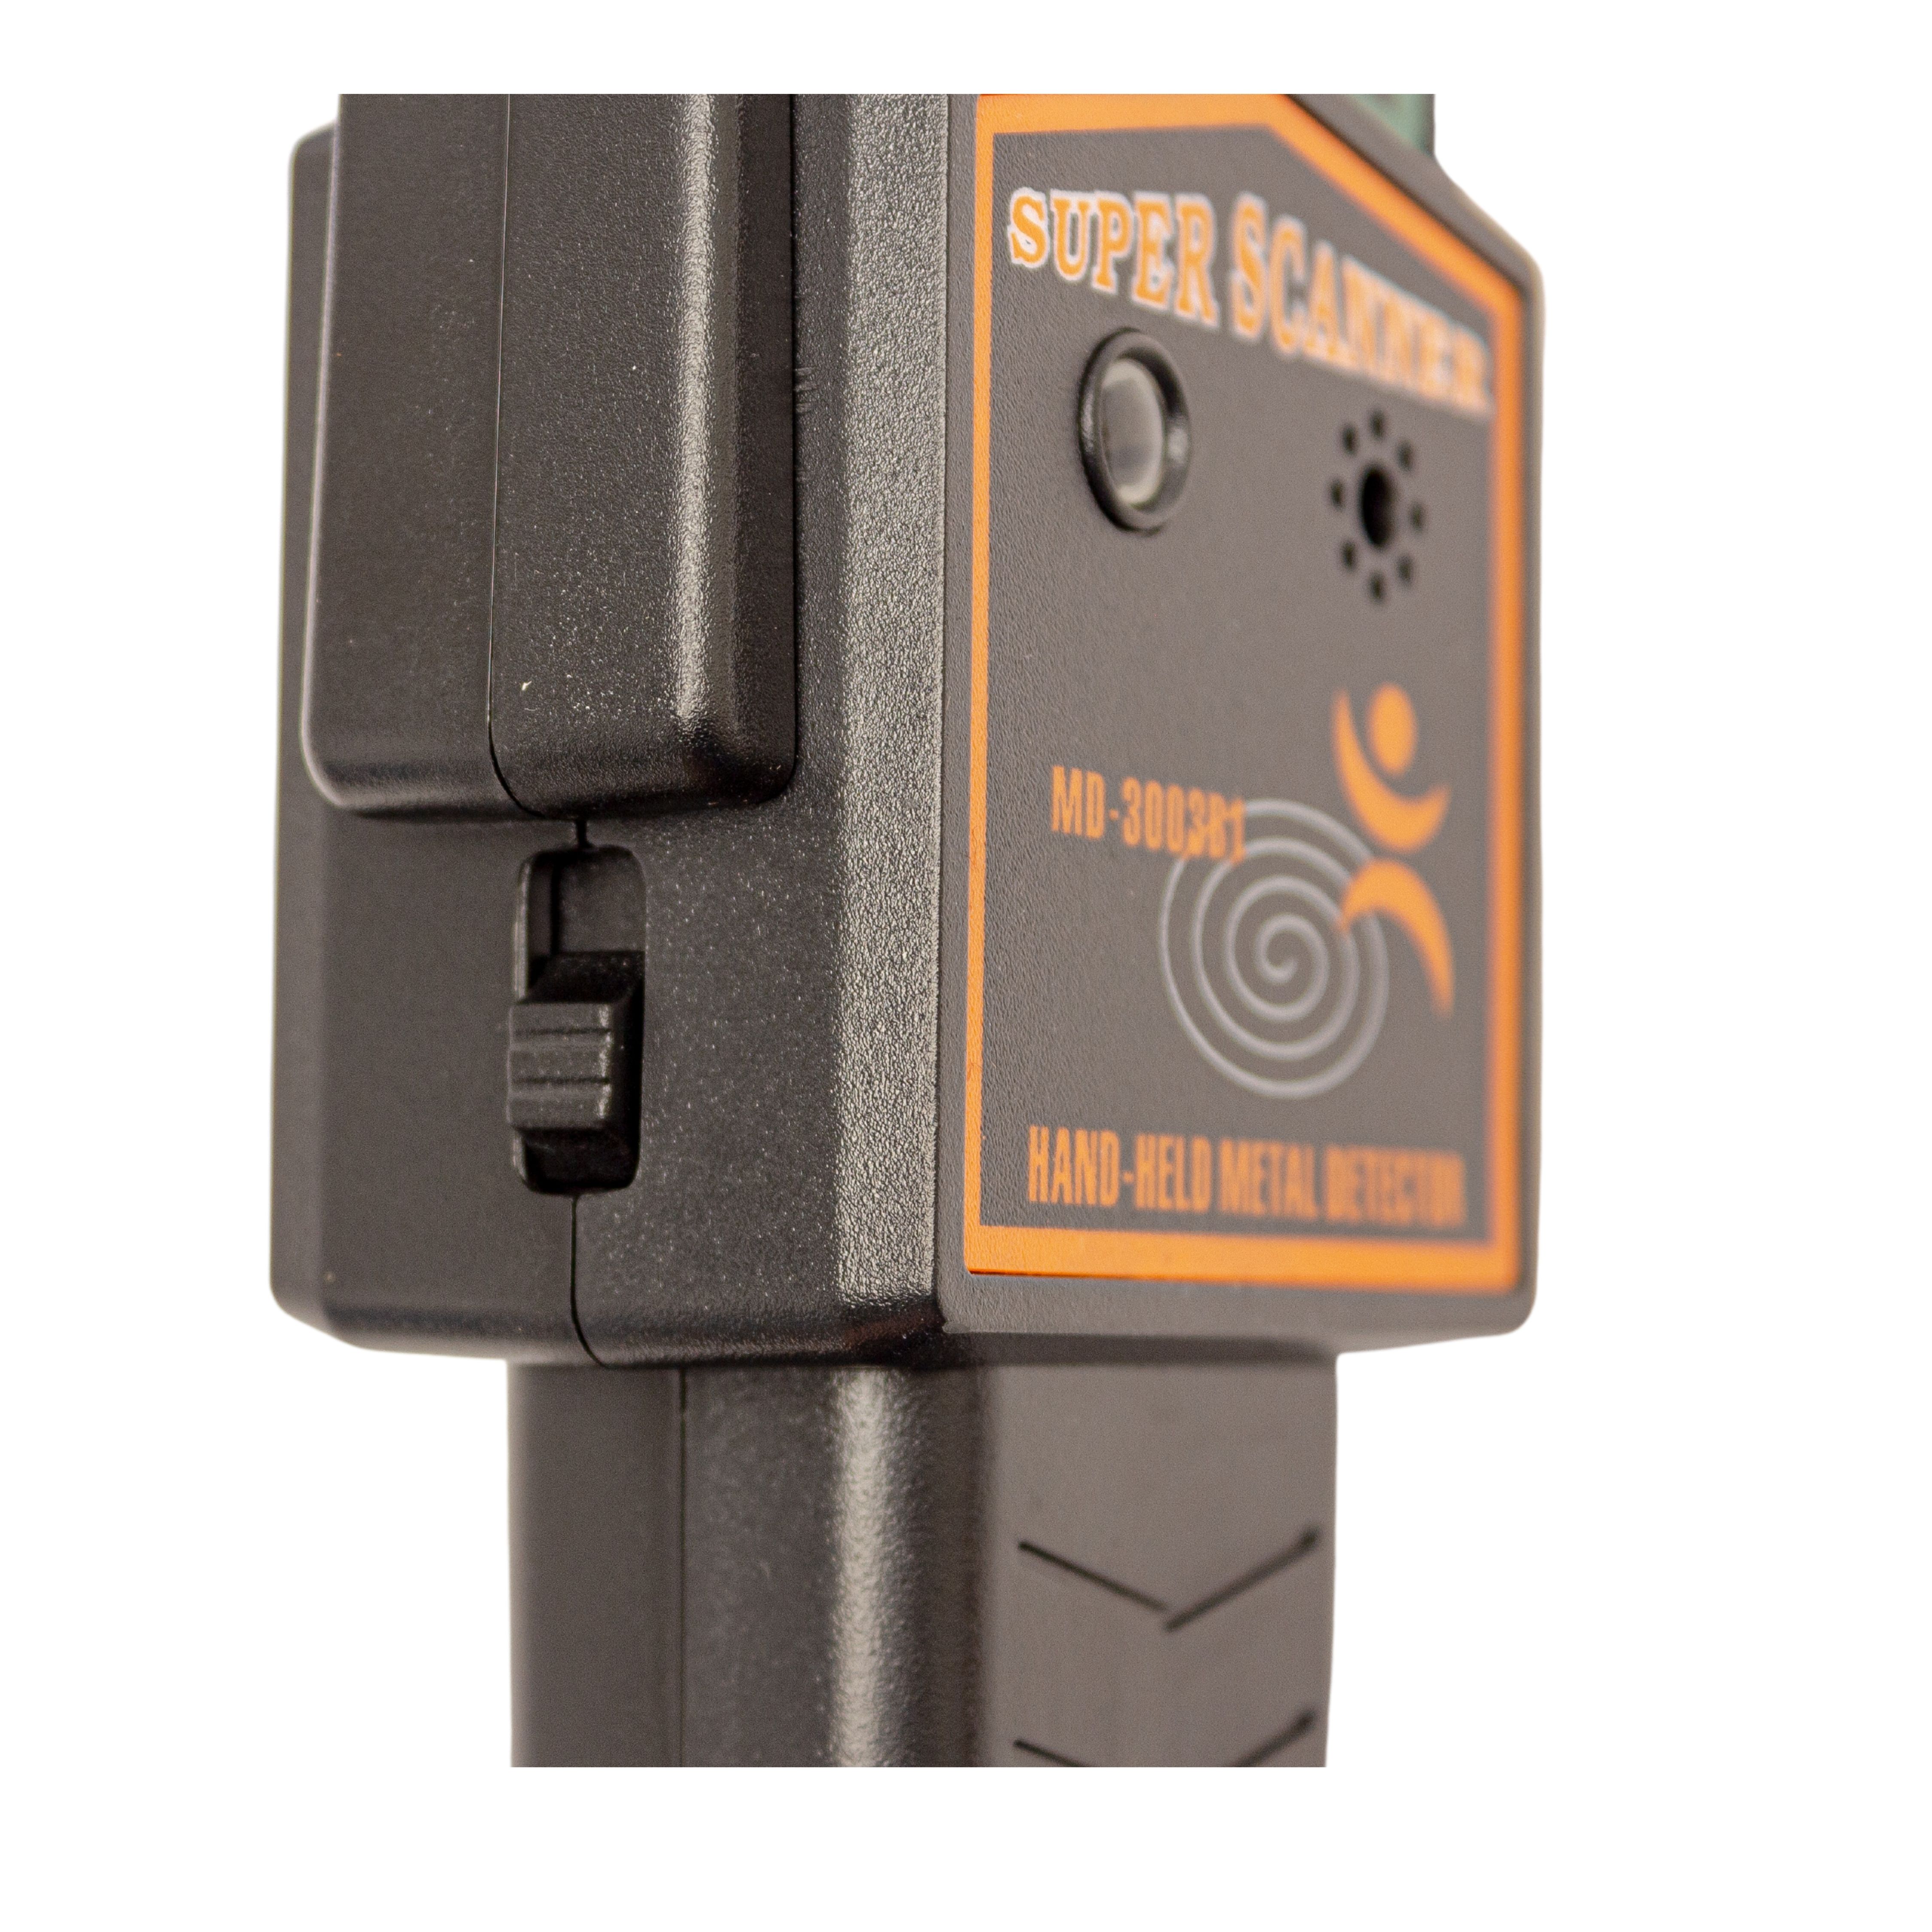 AP-Line draagbare metaal detector, voor beveiliging / ISPS purpose, incl holster